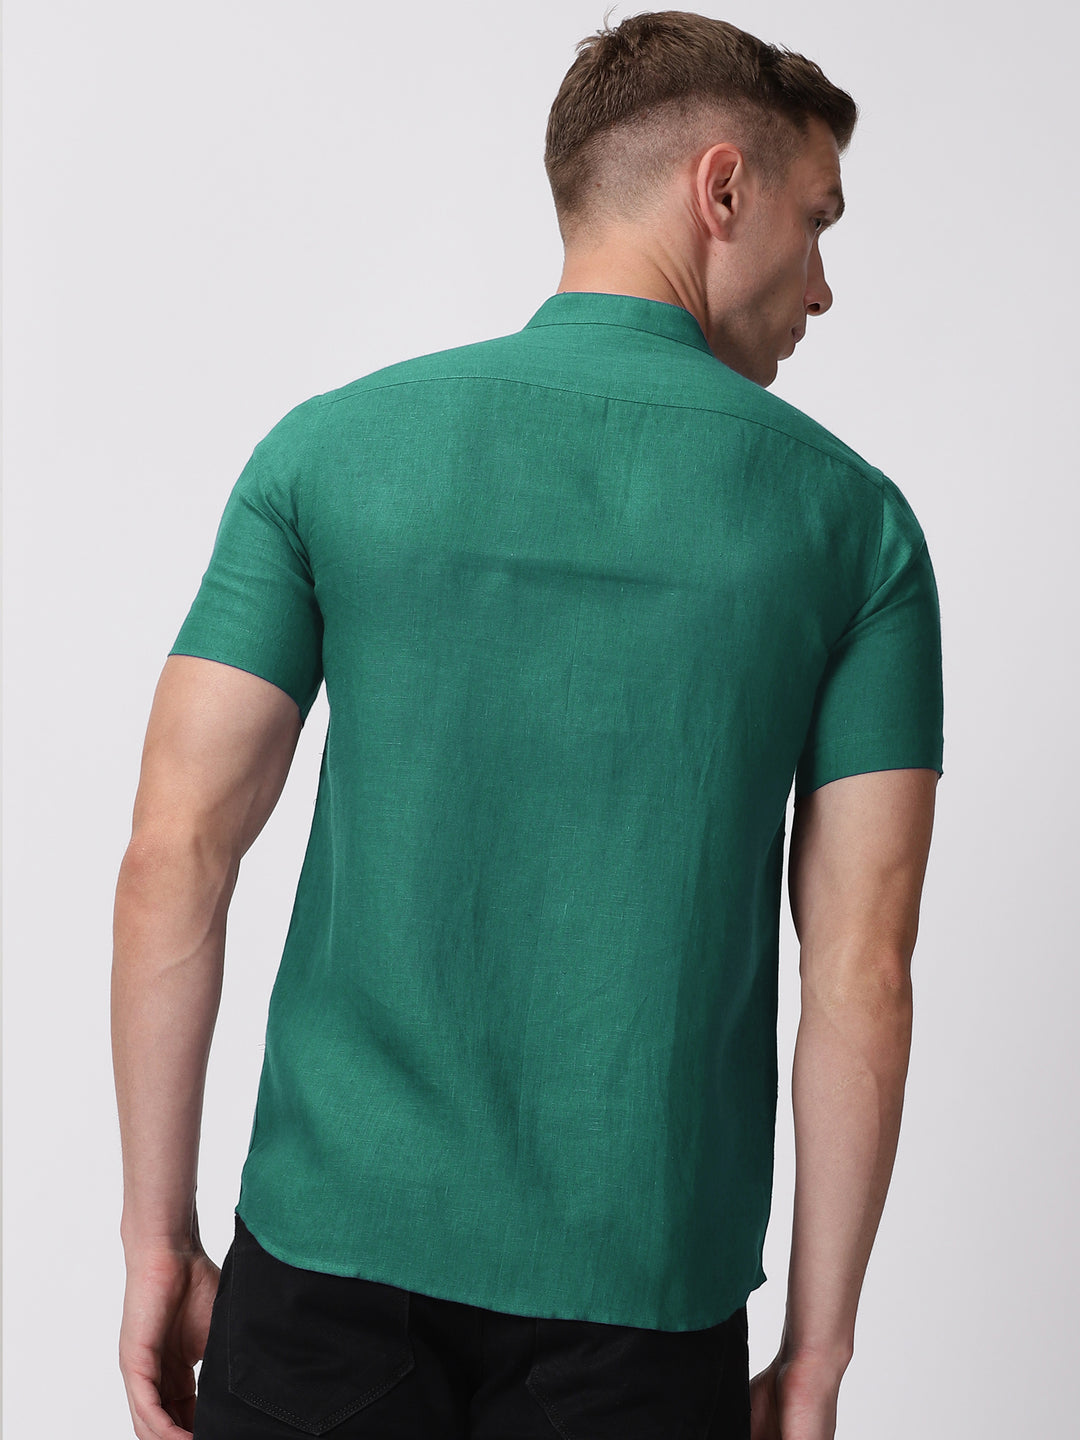 Ronan - Pure Linen Mandarin Collar Half Sleeve Shirt - Teal Green